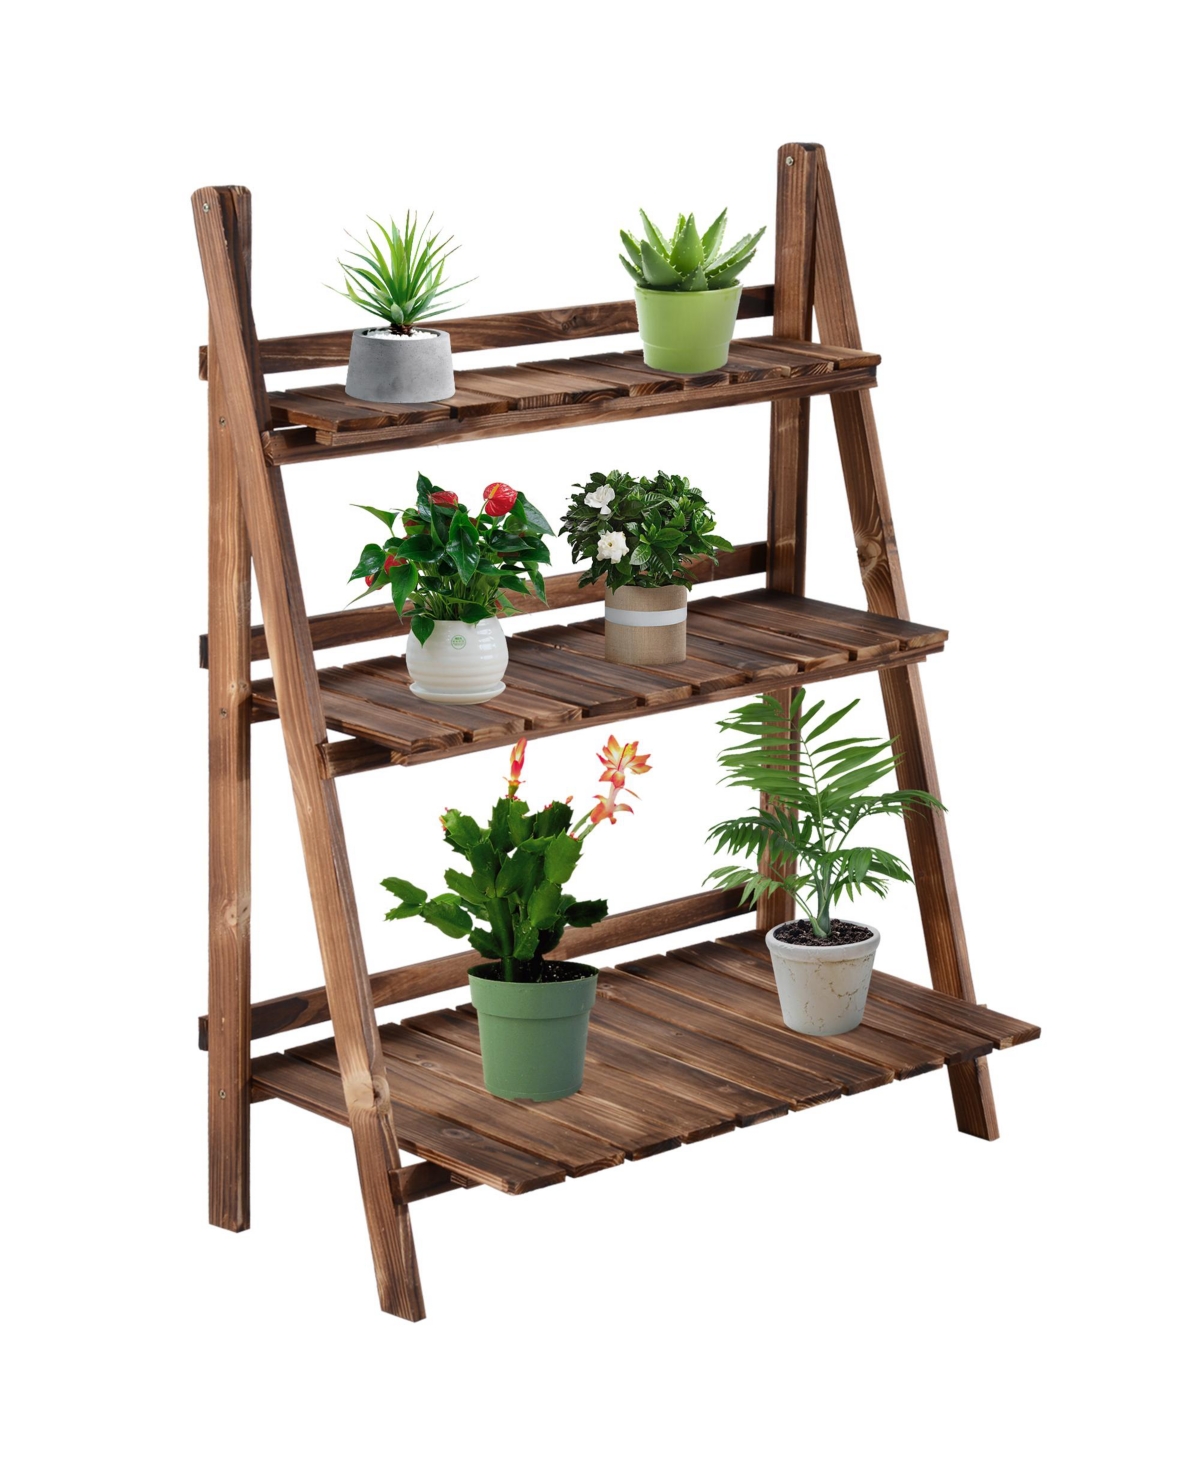 3 Tier Ladder-style Wooden Flower Plant Stand Outdoor Garden Shelf - Natural